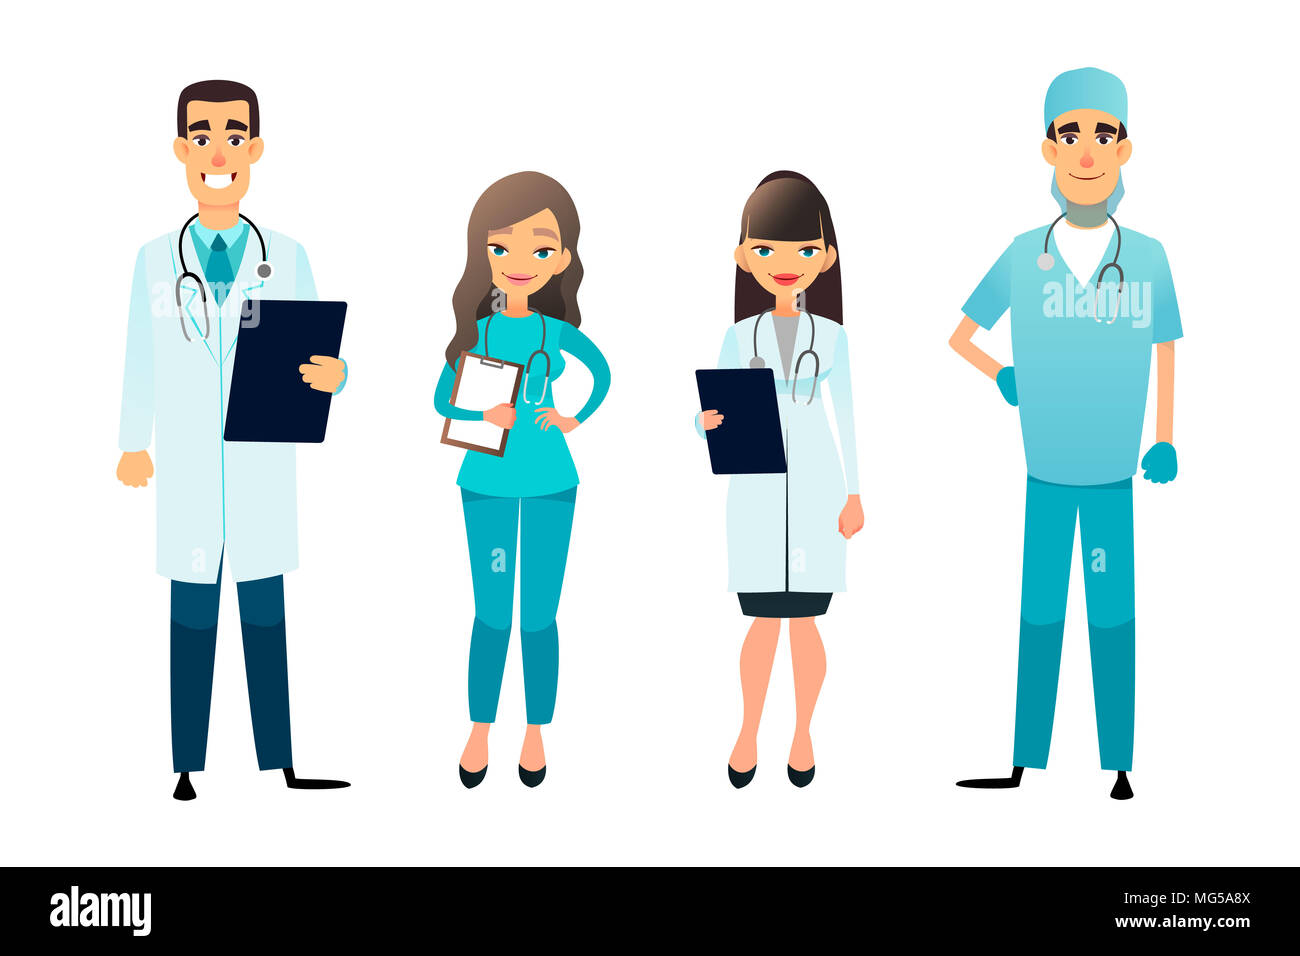 Doctors and nurses team. Cartoon medical staff. Medical team concept. Surgeon, nurse and therapist on hospital. Professional health workers. Stock Photo